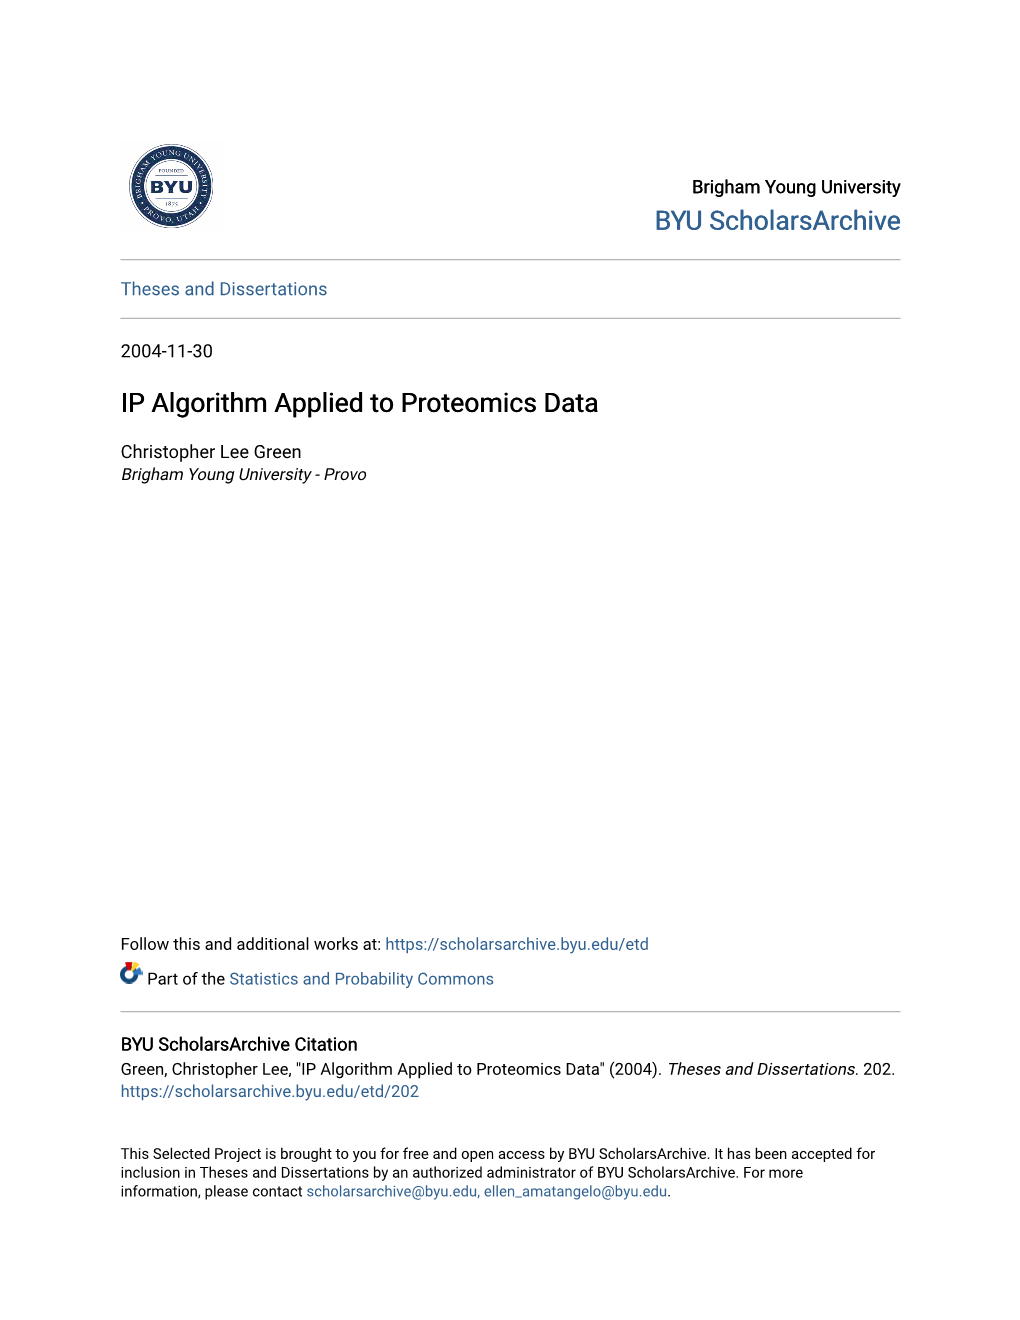 IP Algorithm Applied to Proteomics Data